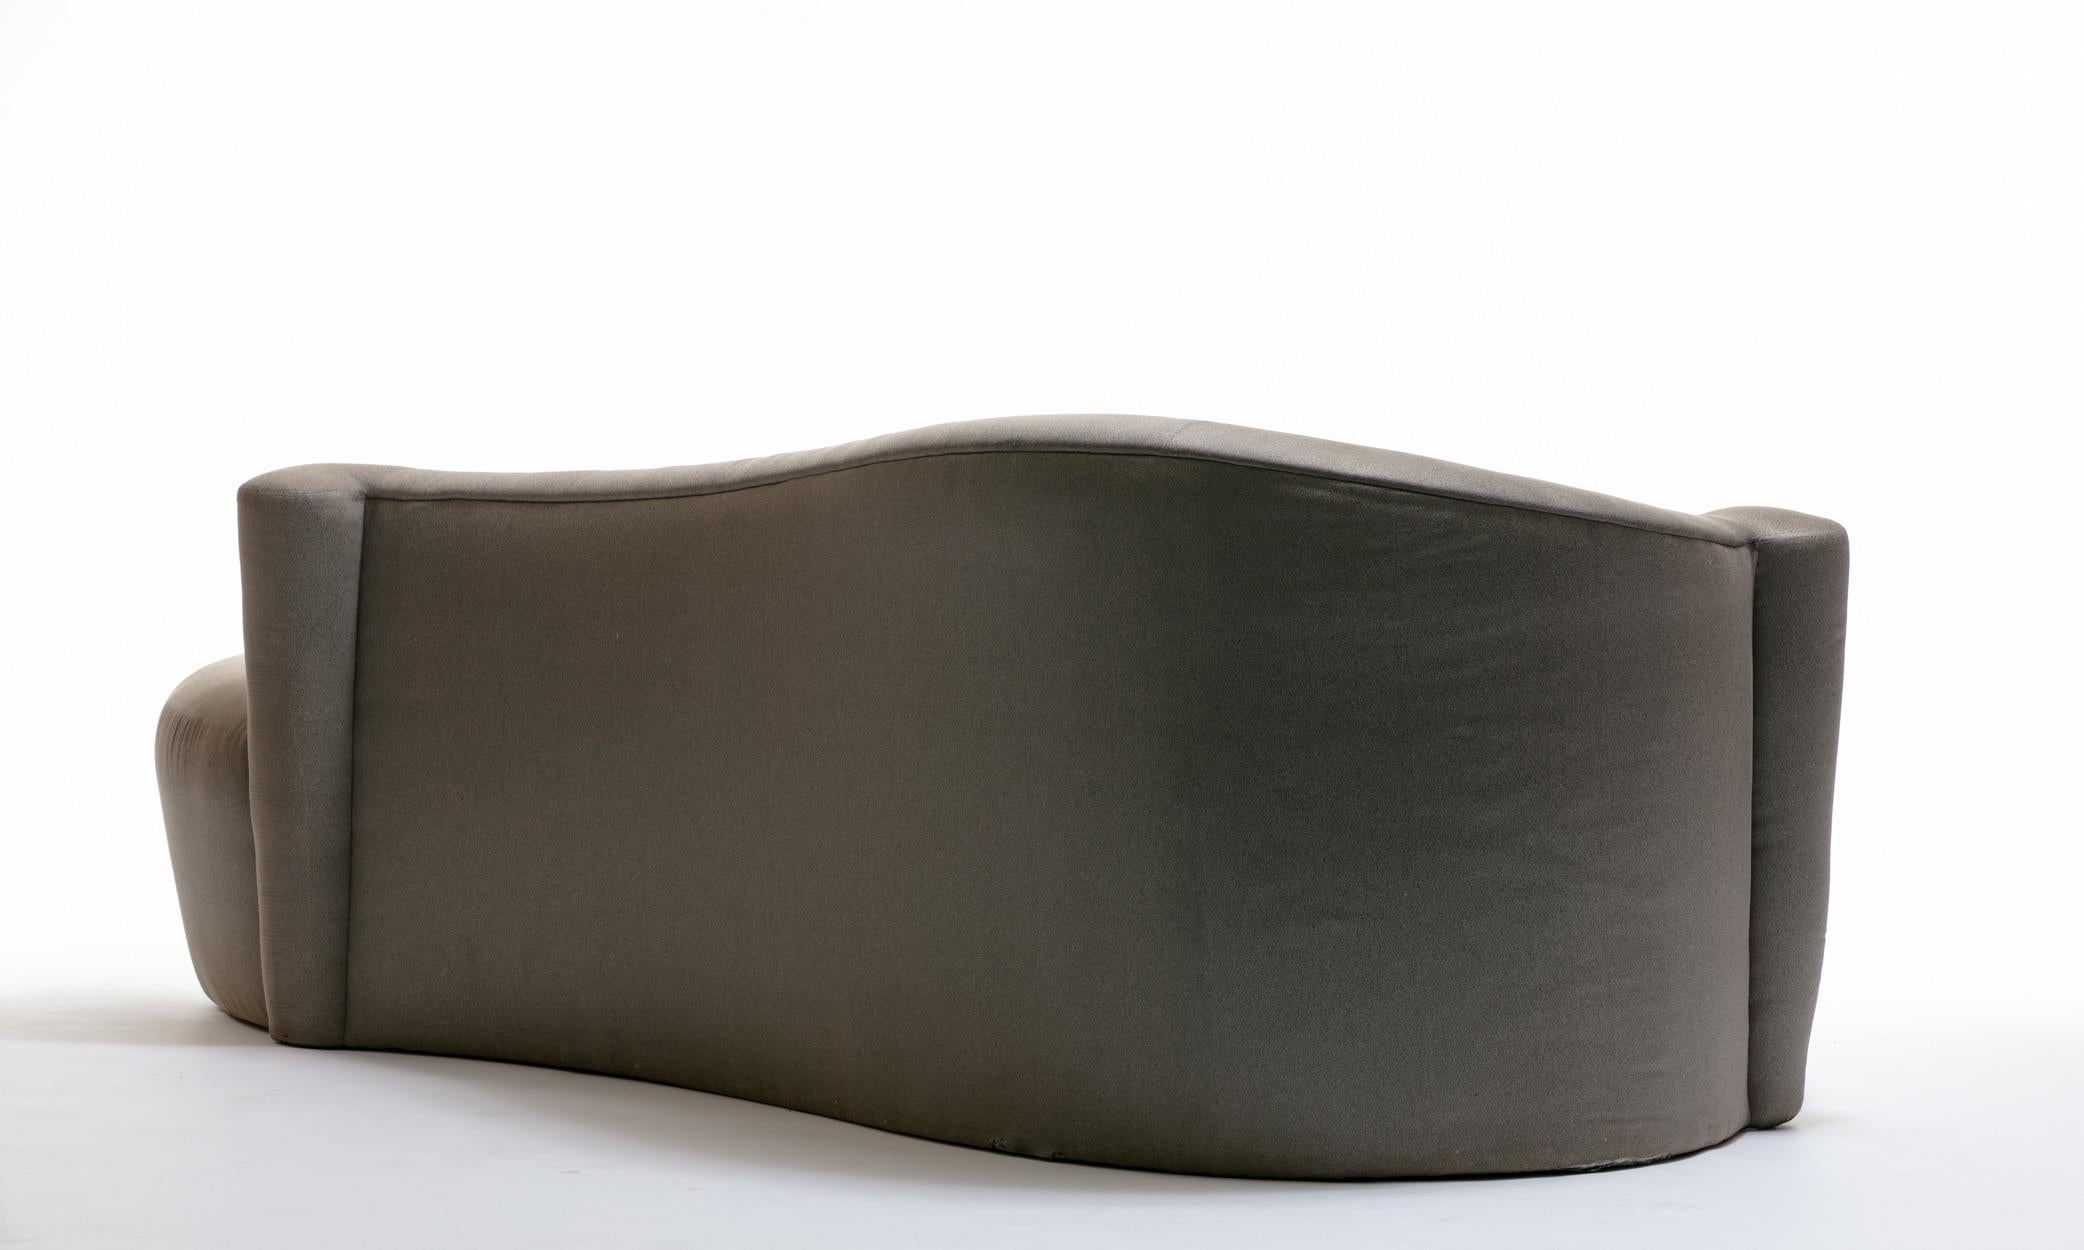 Fabric Sculptural Cloud Sofa by Weiman